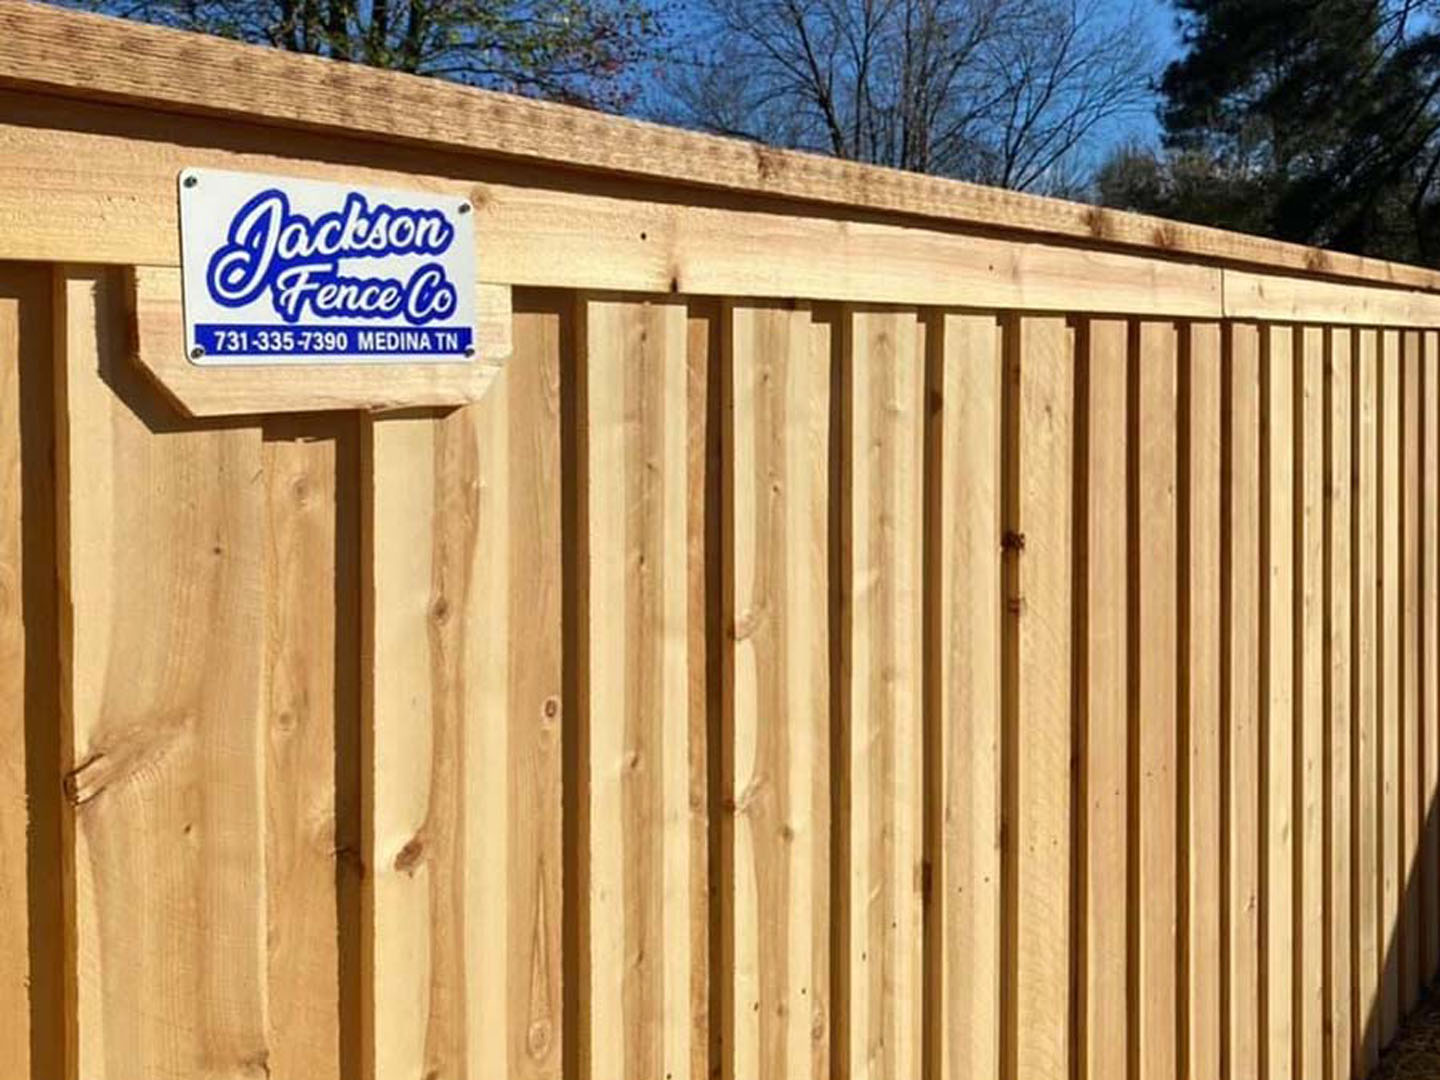  Trenton TN cap and trim style wood fence